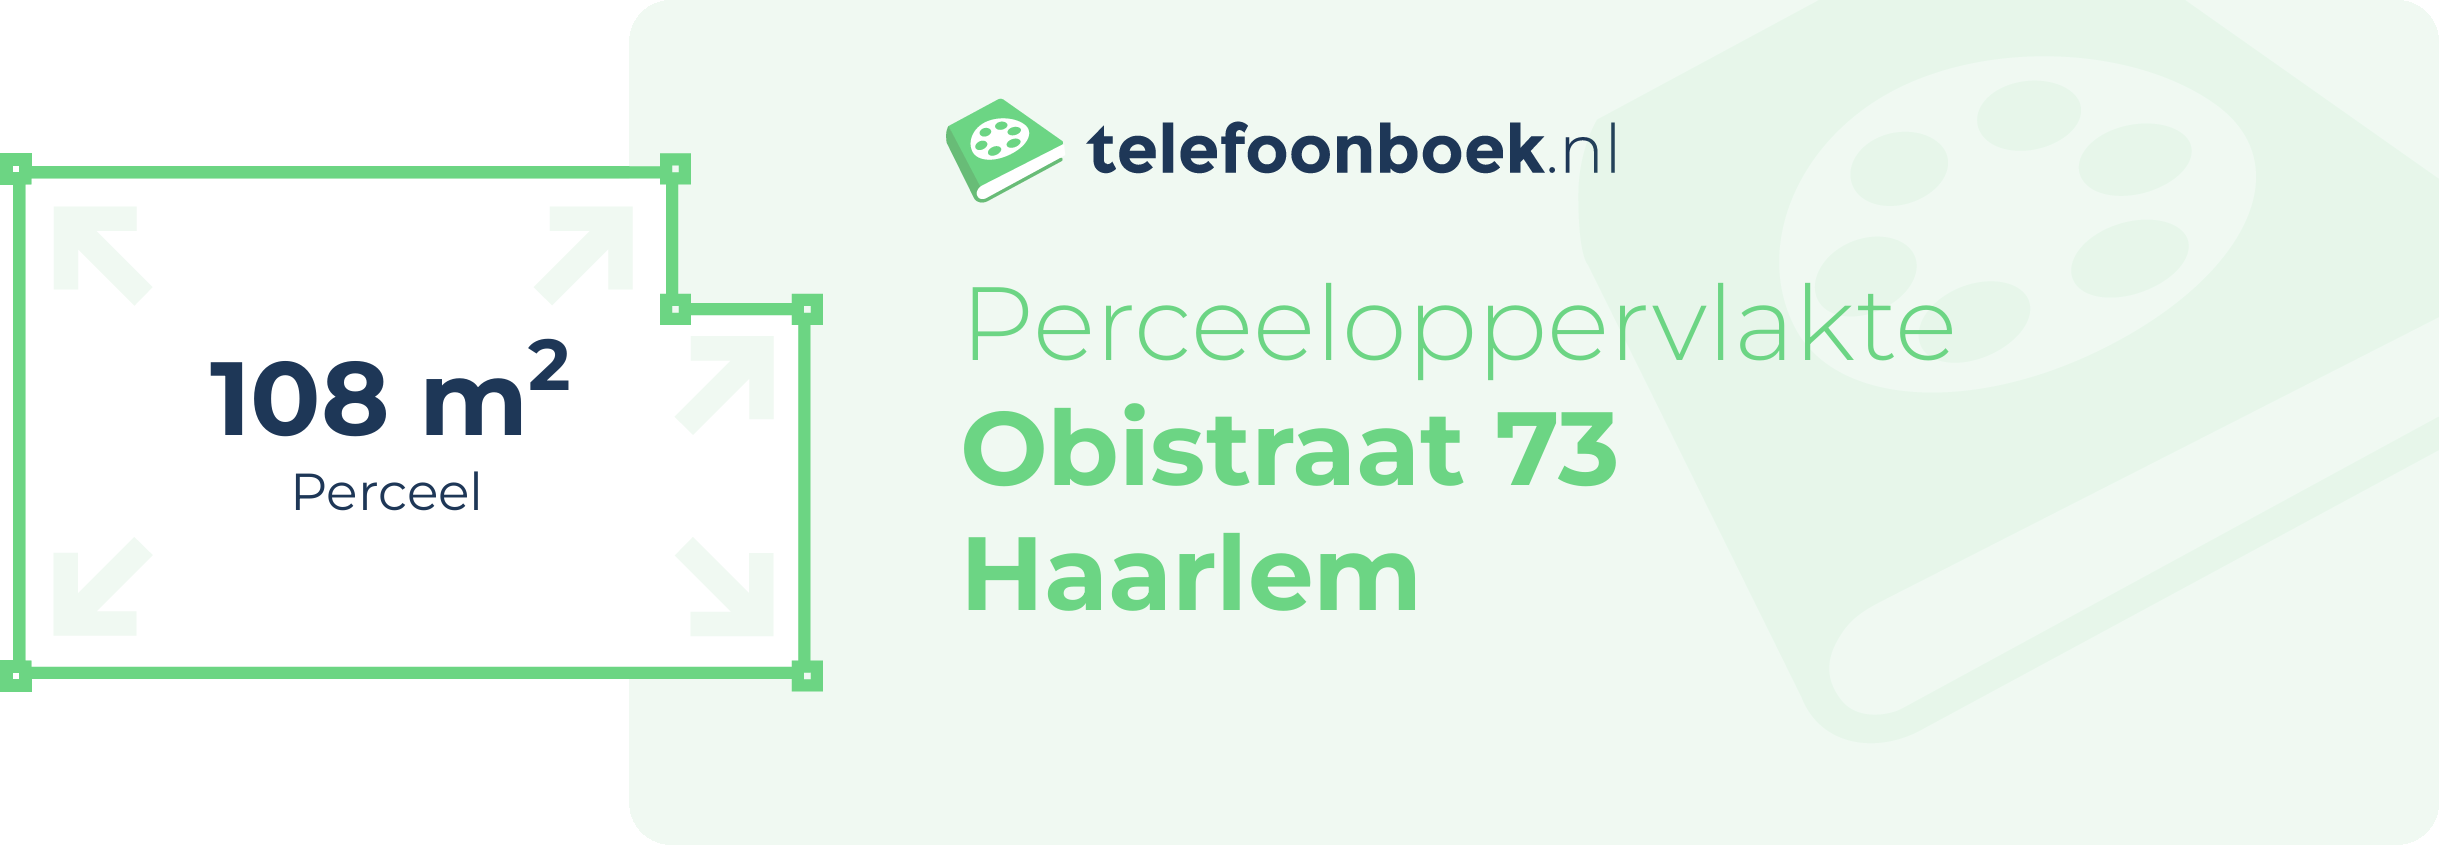 Perceeloppervlakte Obistraat 73 Haarlem